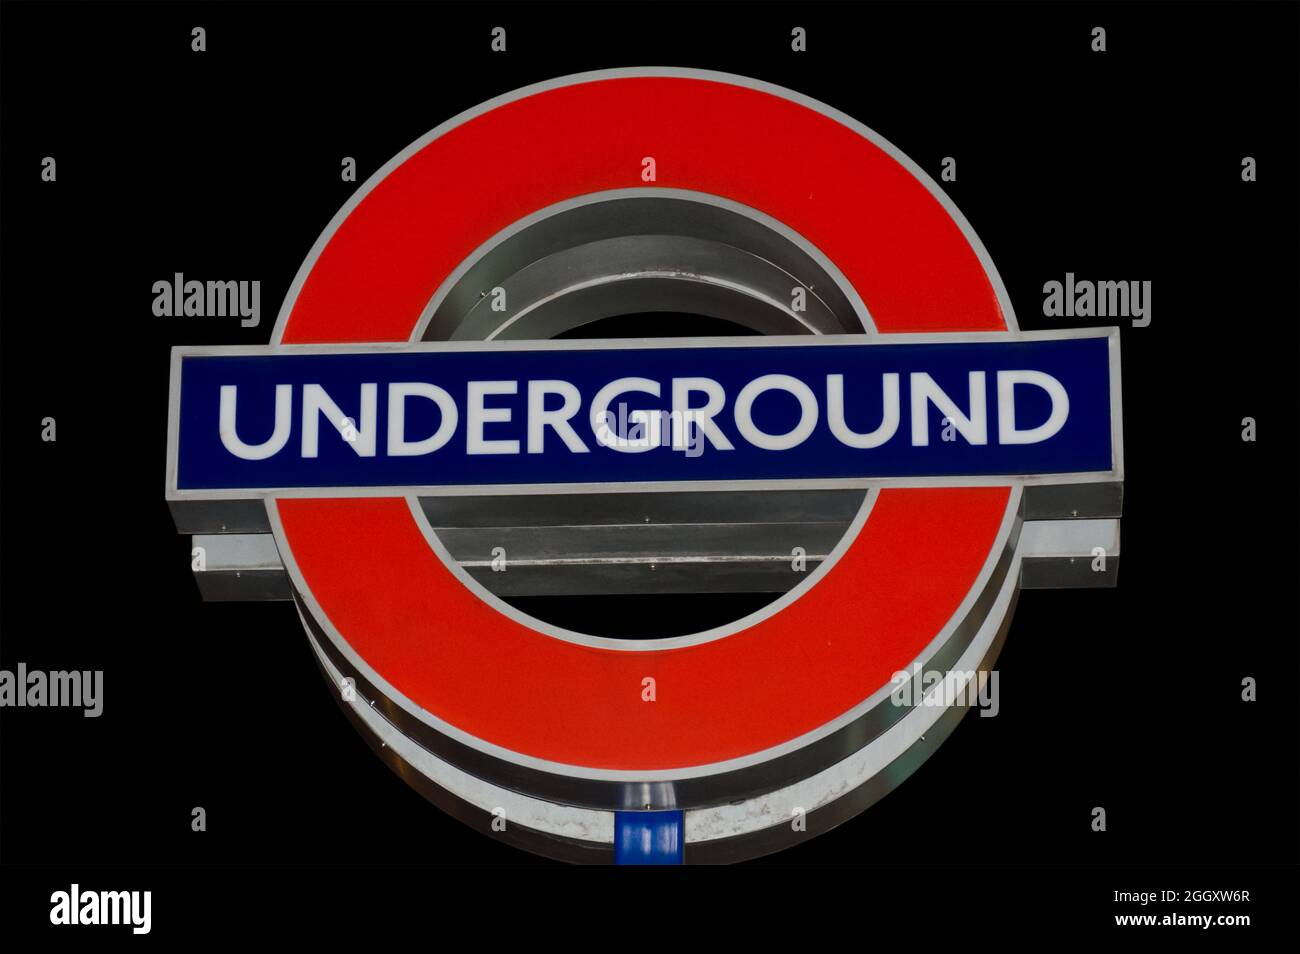 London Underground sign captured at night. Stock Photo